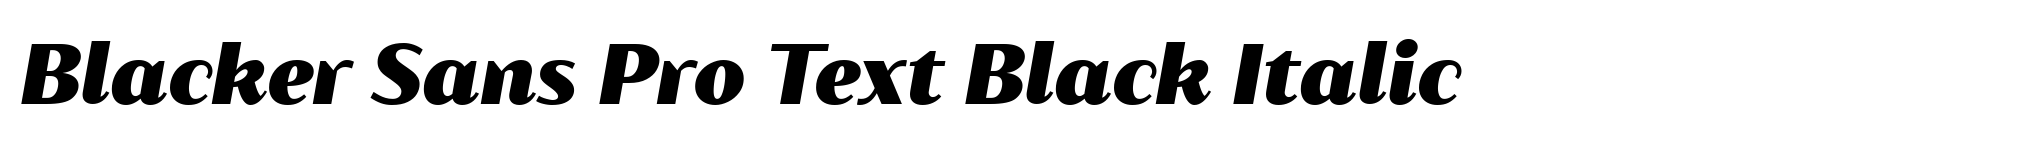 Blacker Sans Pro Text Black Italic image